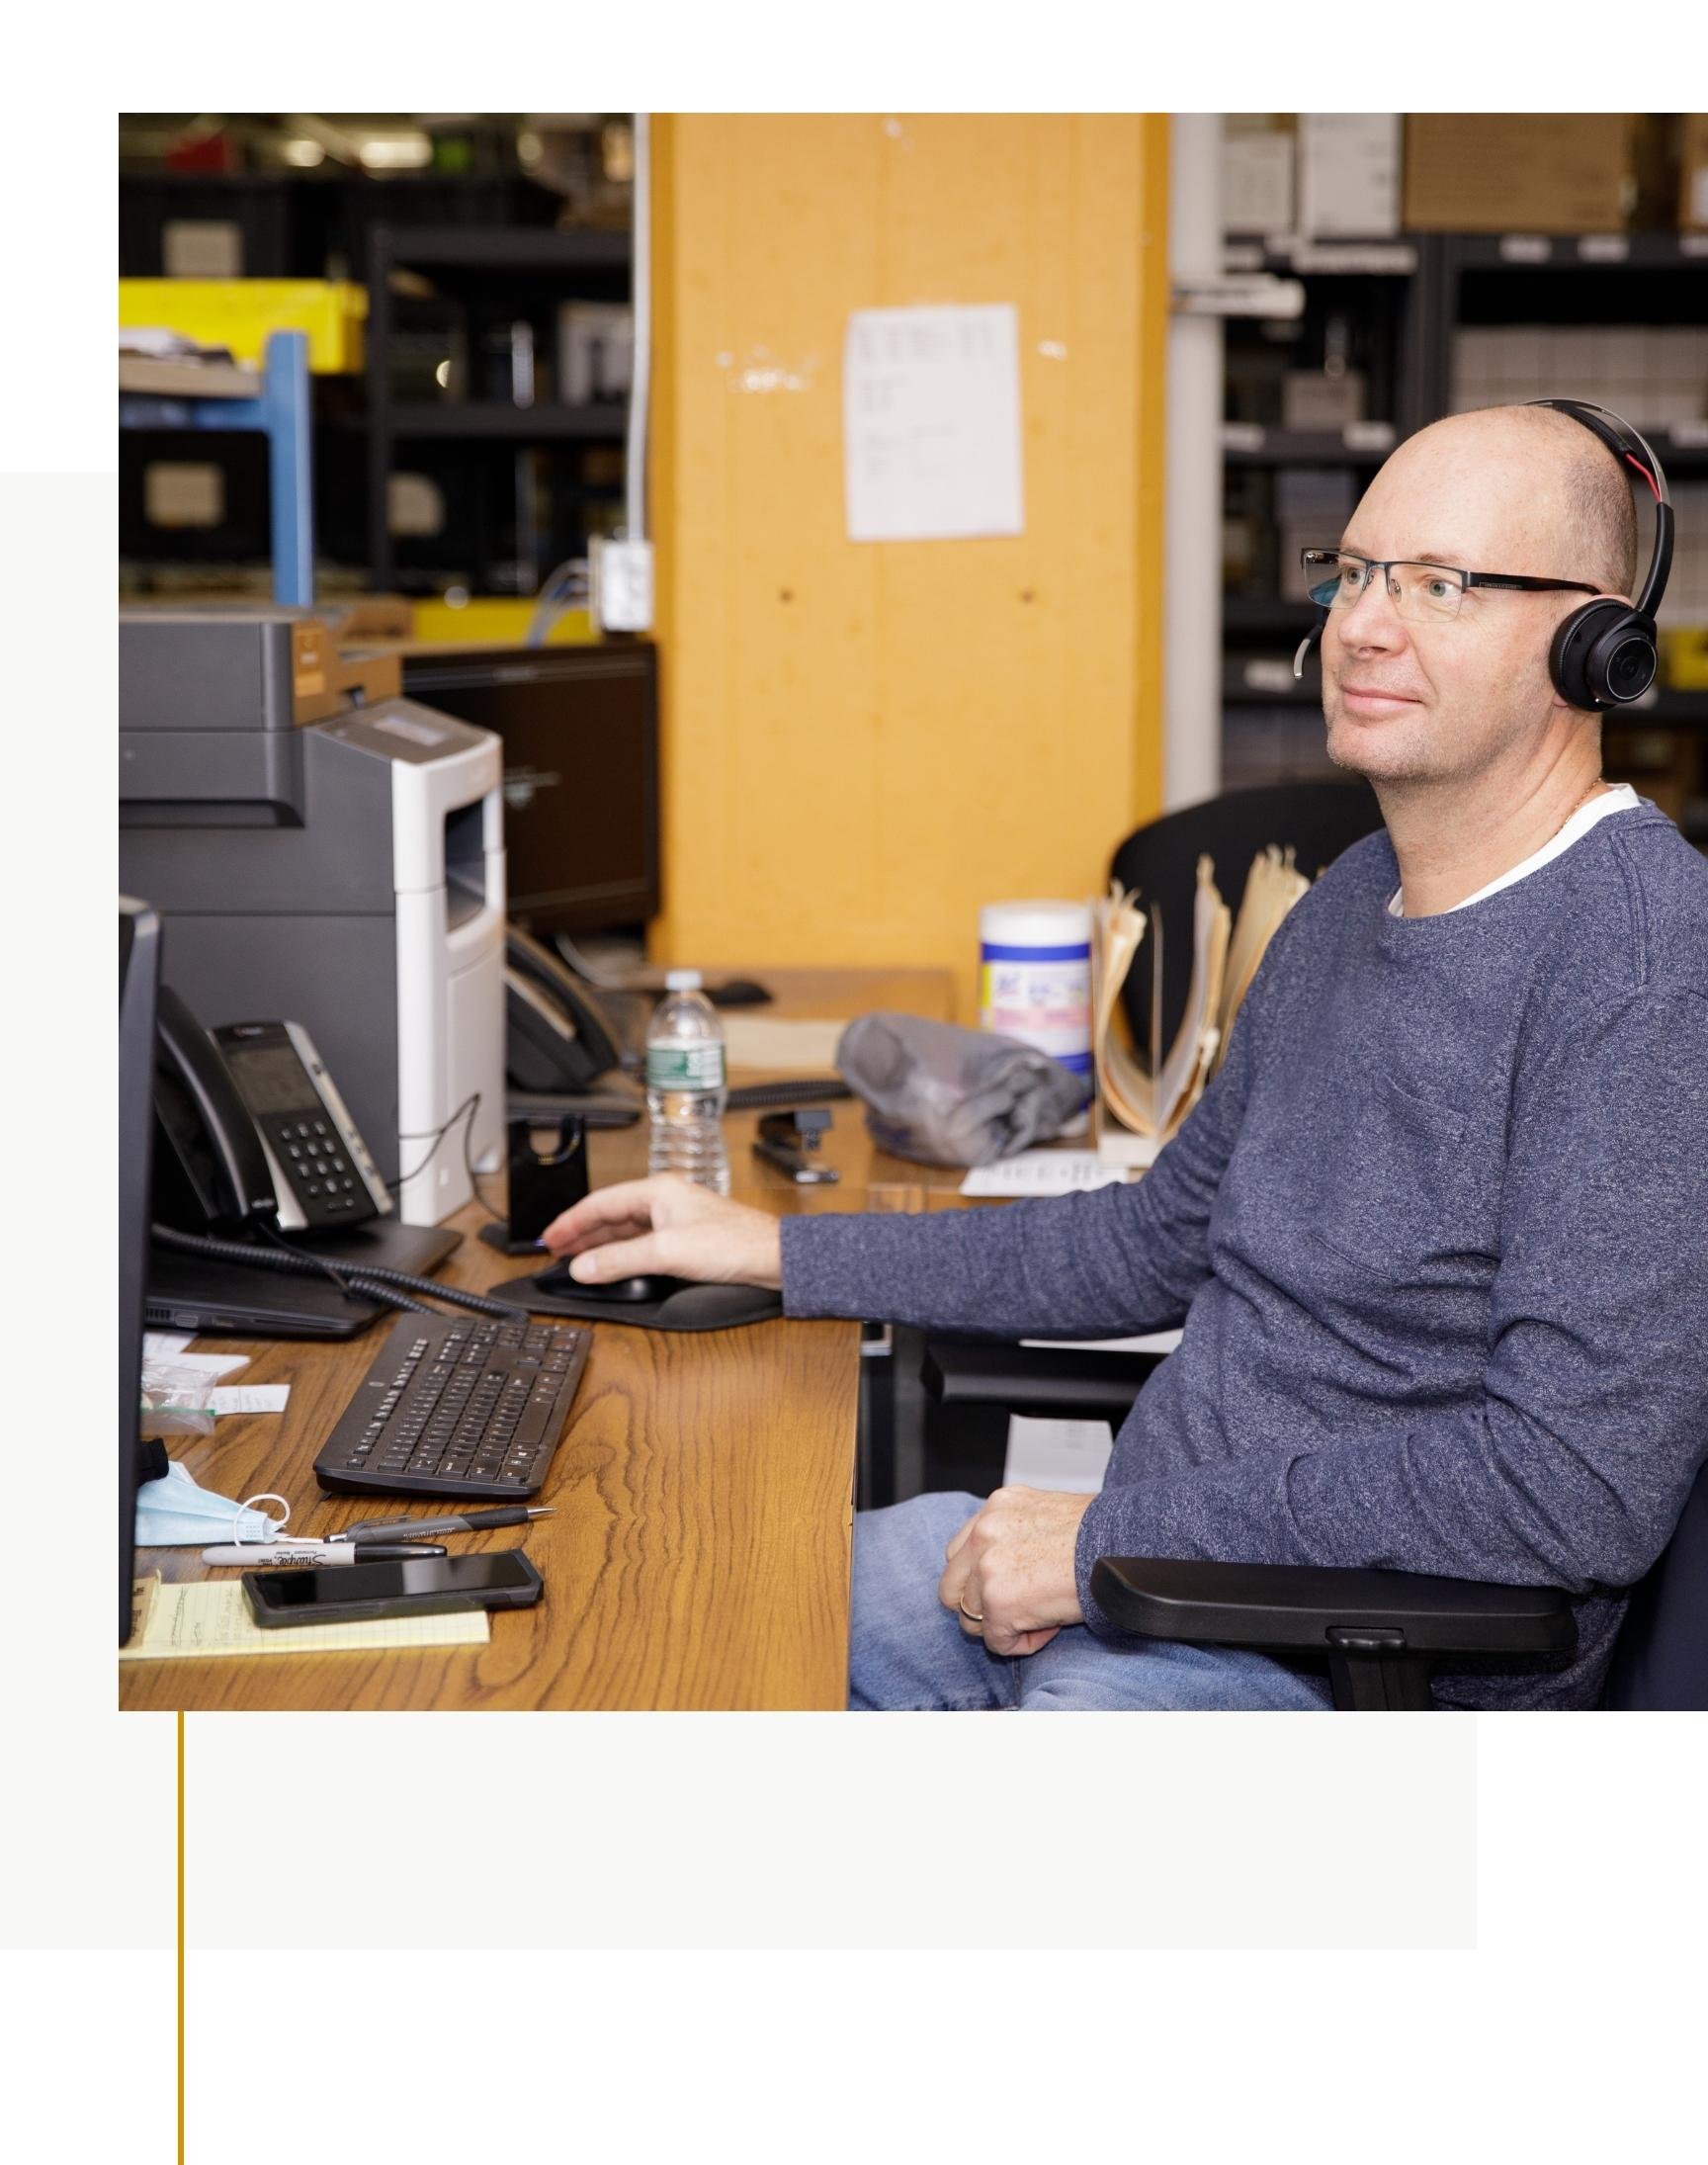 Usherwood employee with headset working at desk